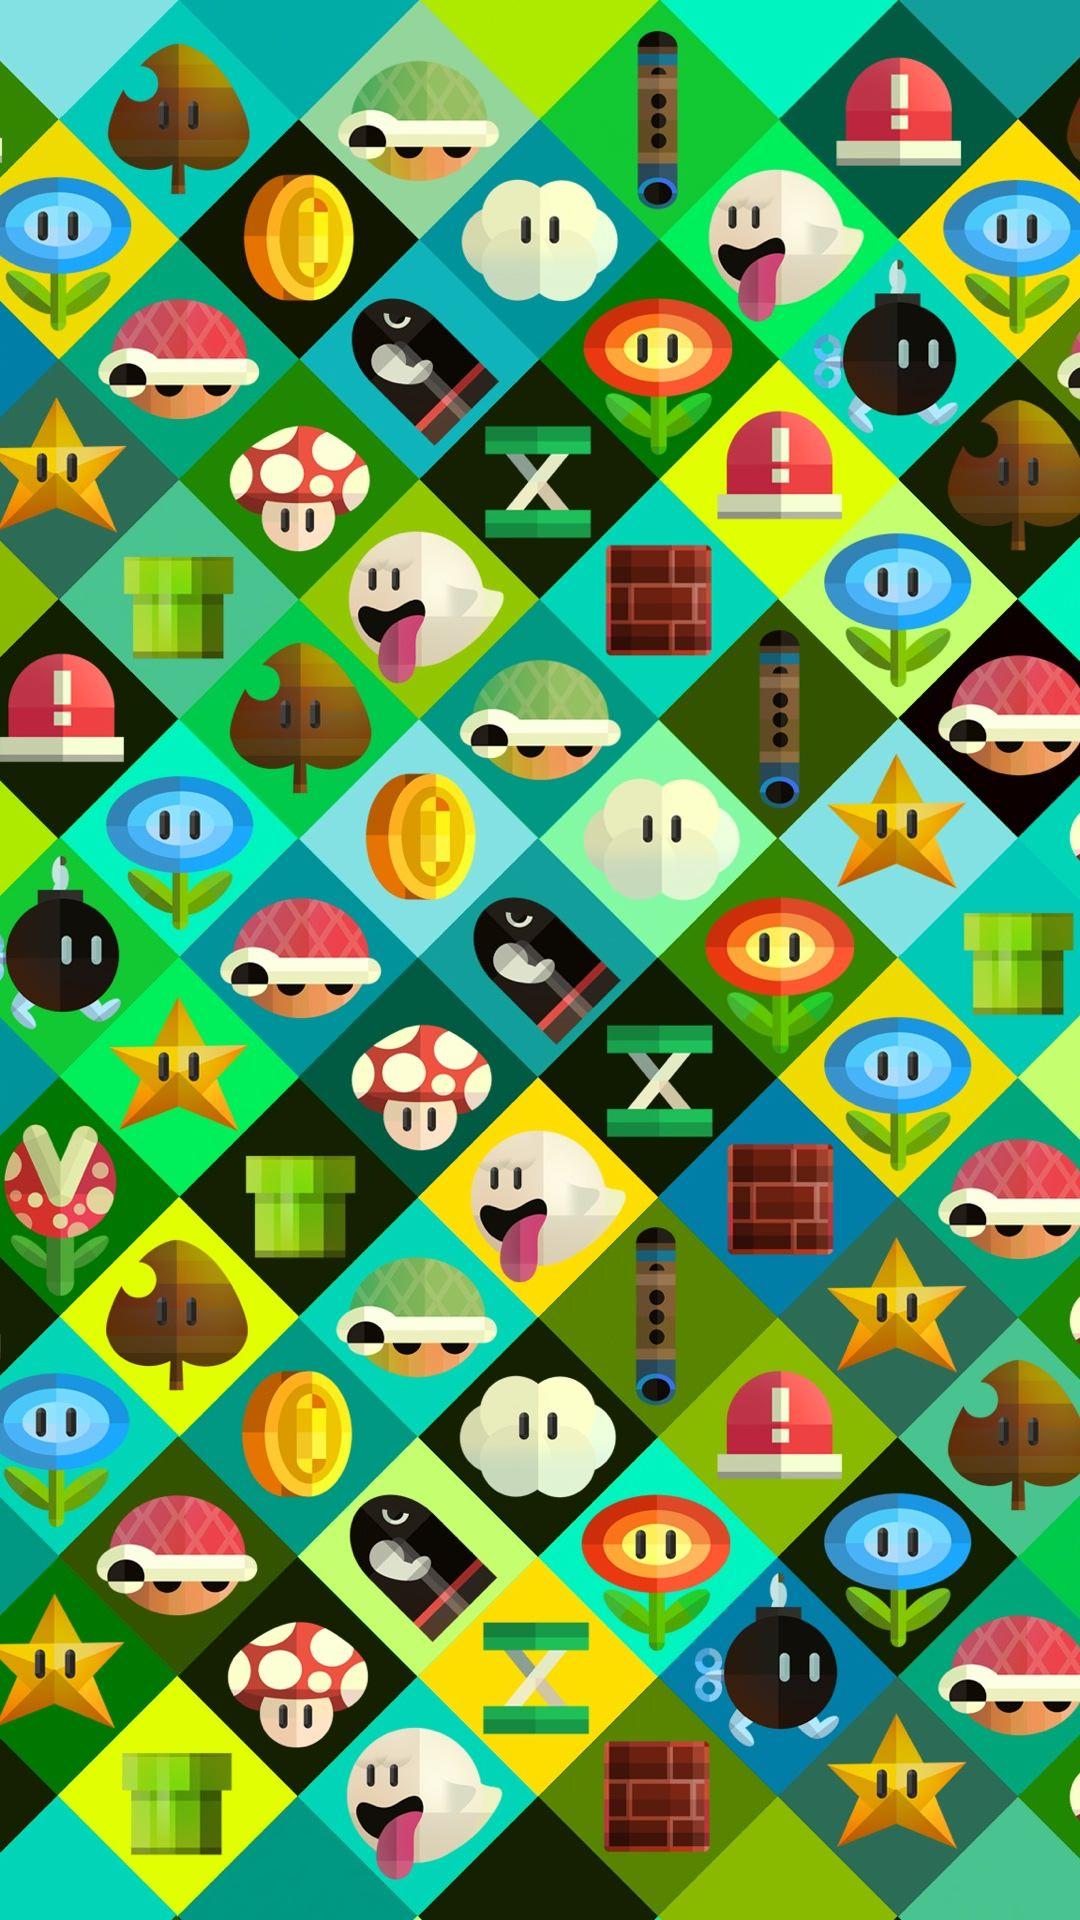 iPhone wallpaper Super Mario characters